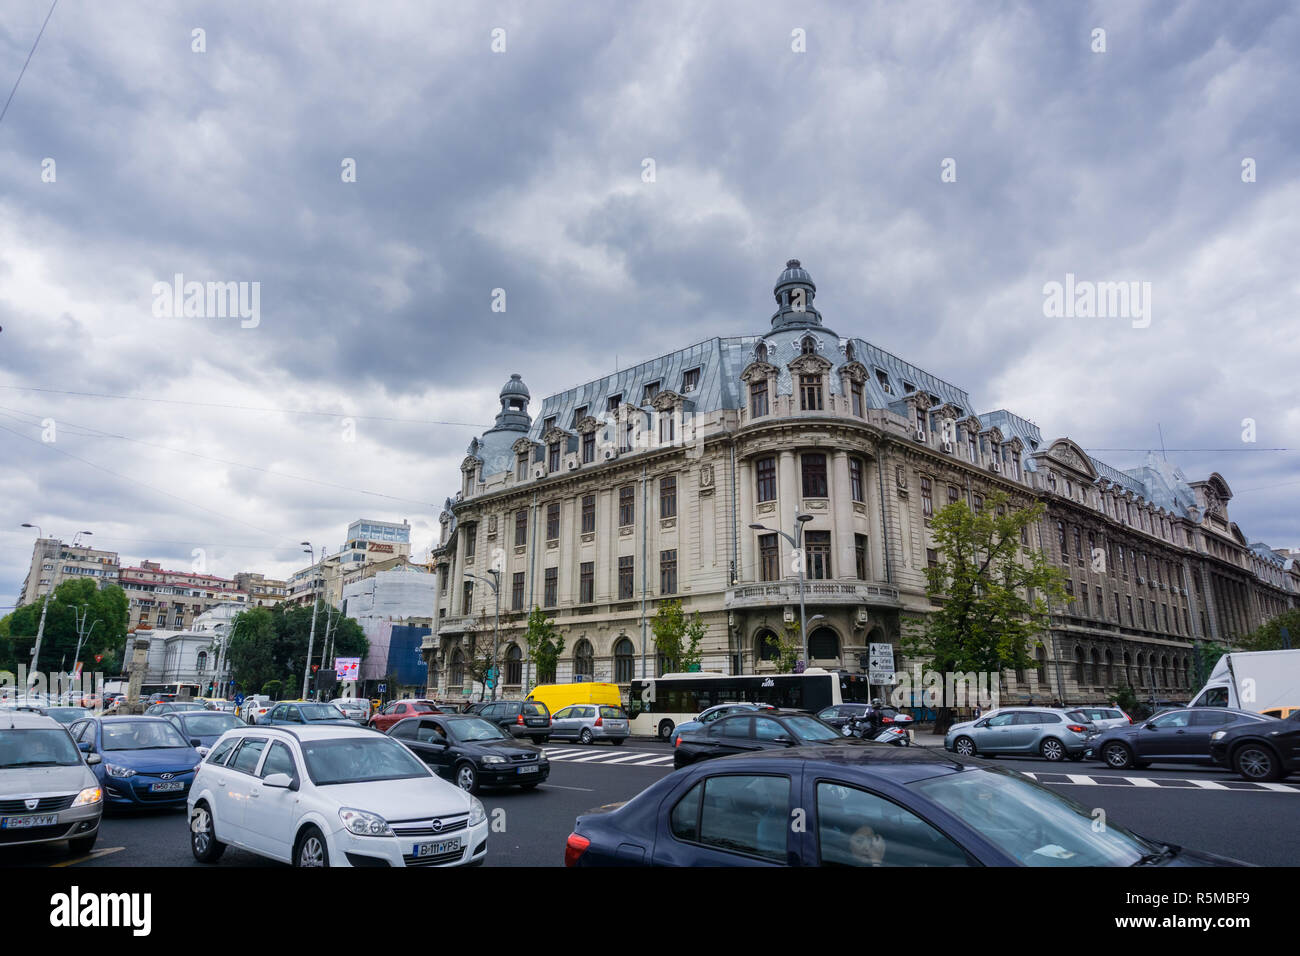 September 22, 2017 Bucharest/Romania - Heavy traffic in downtown Bucharest, University of Bucharest (Universitatea din Bucuresti) in the background Stock Photo